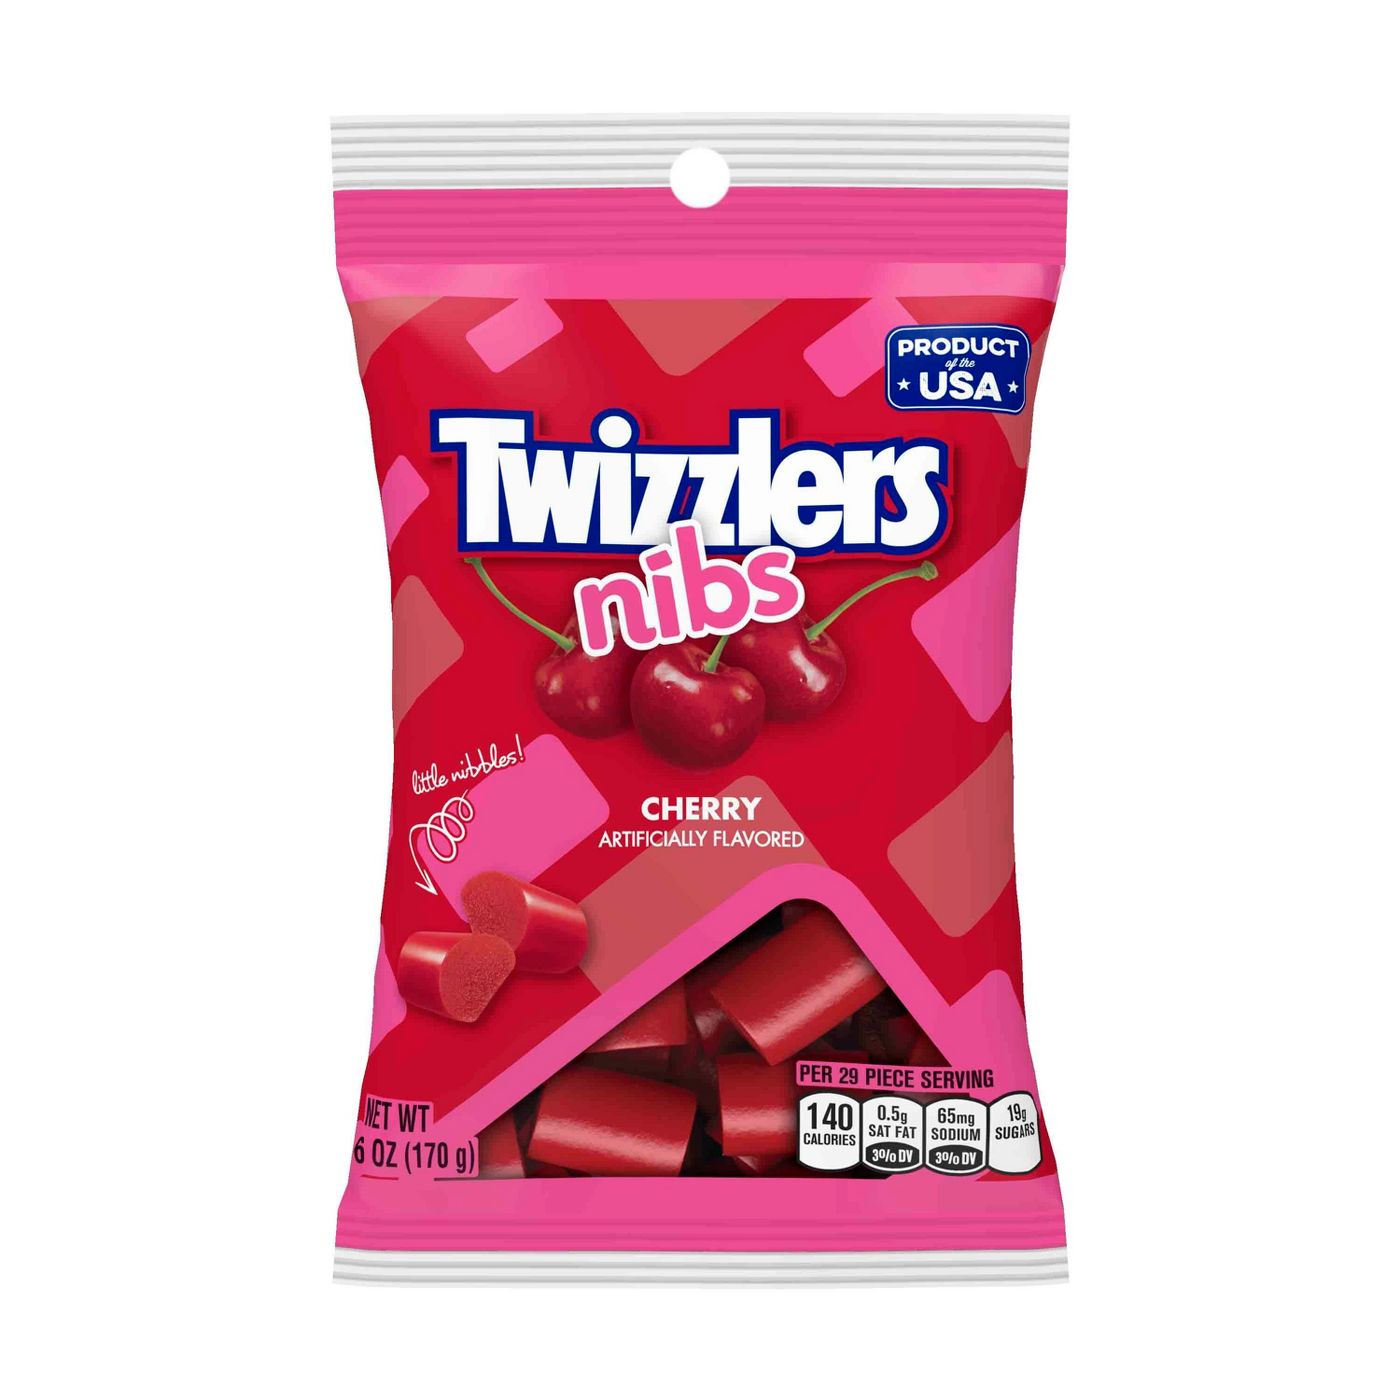 Twizzles nibss cherry (36x 63g)